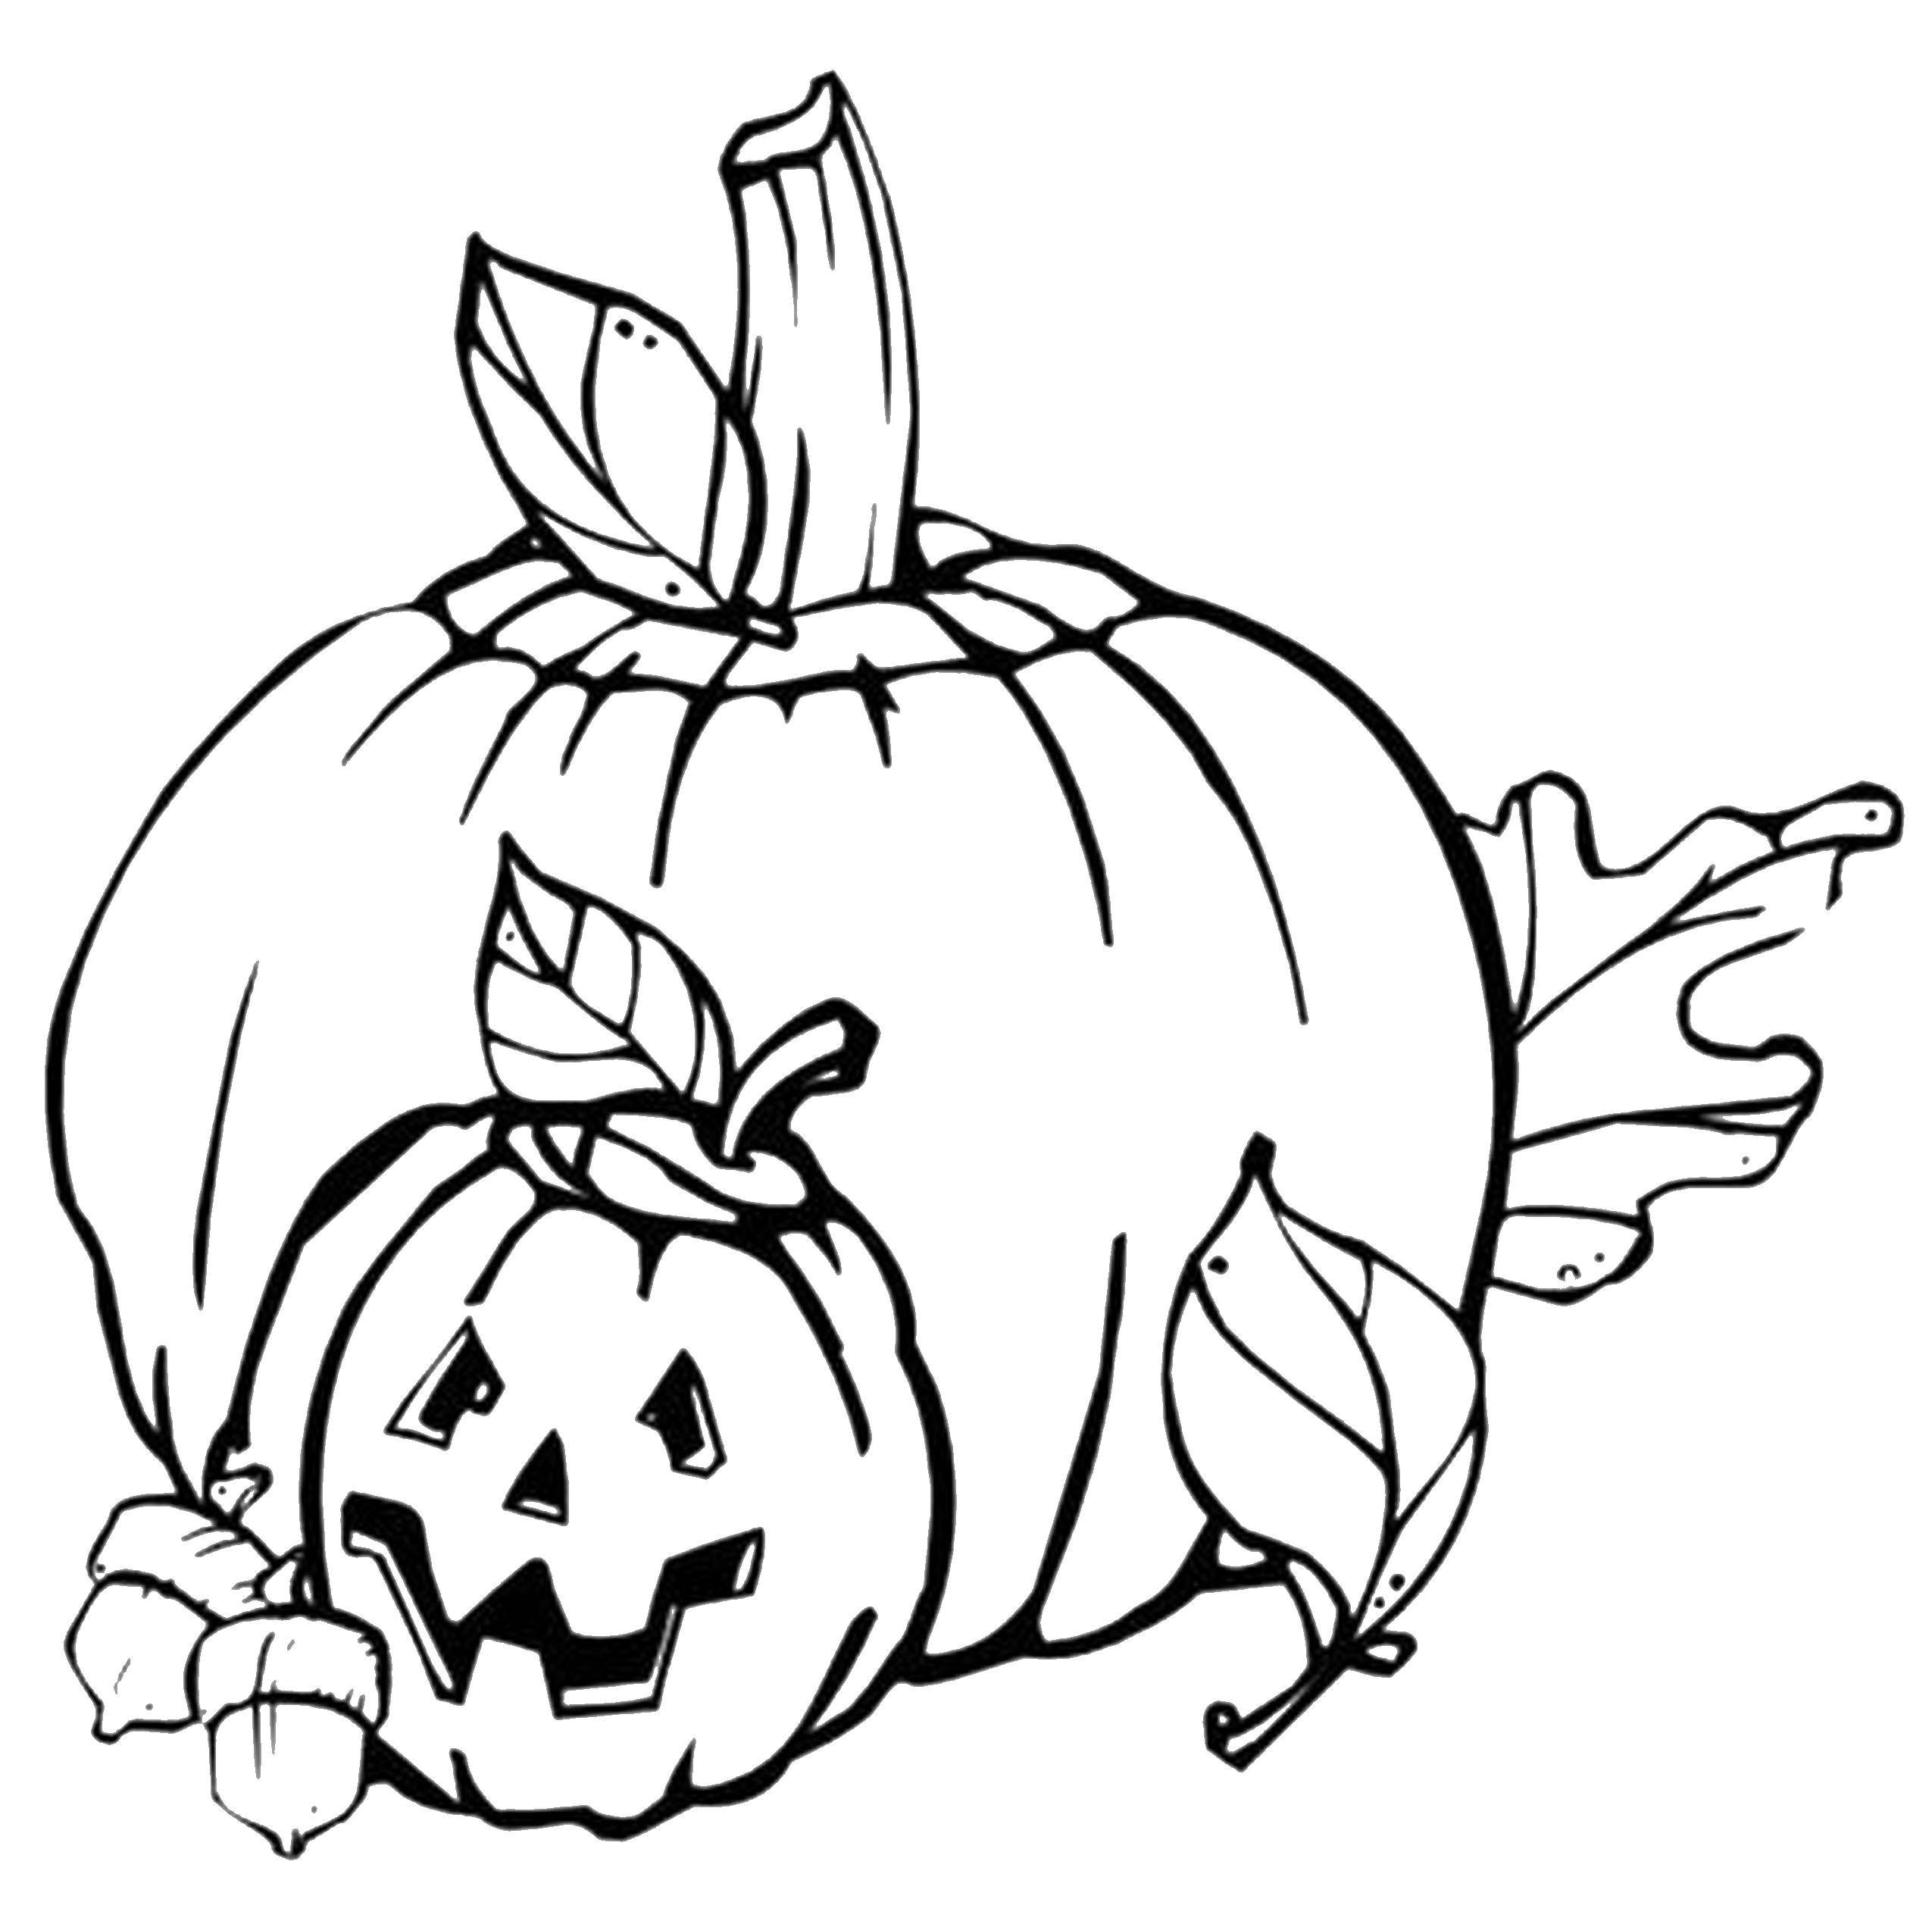 Coloring Pumpkin. Category Halloween. Tags:  Halloween, autumn, pumpkins.